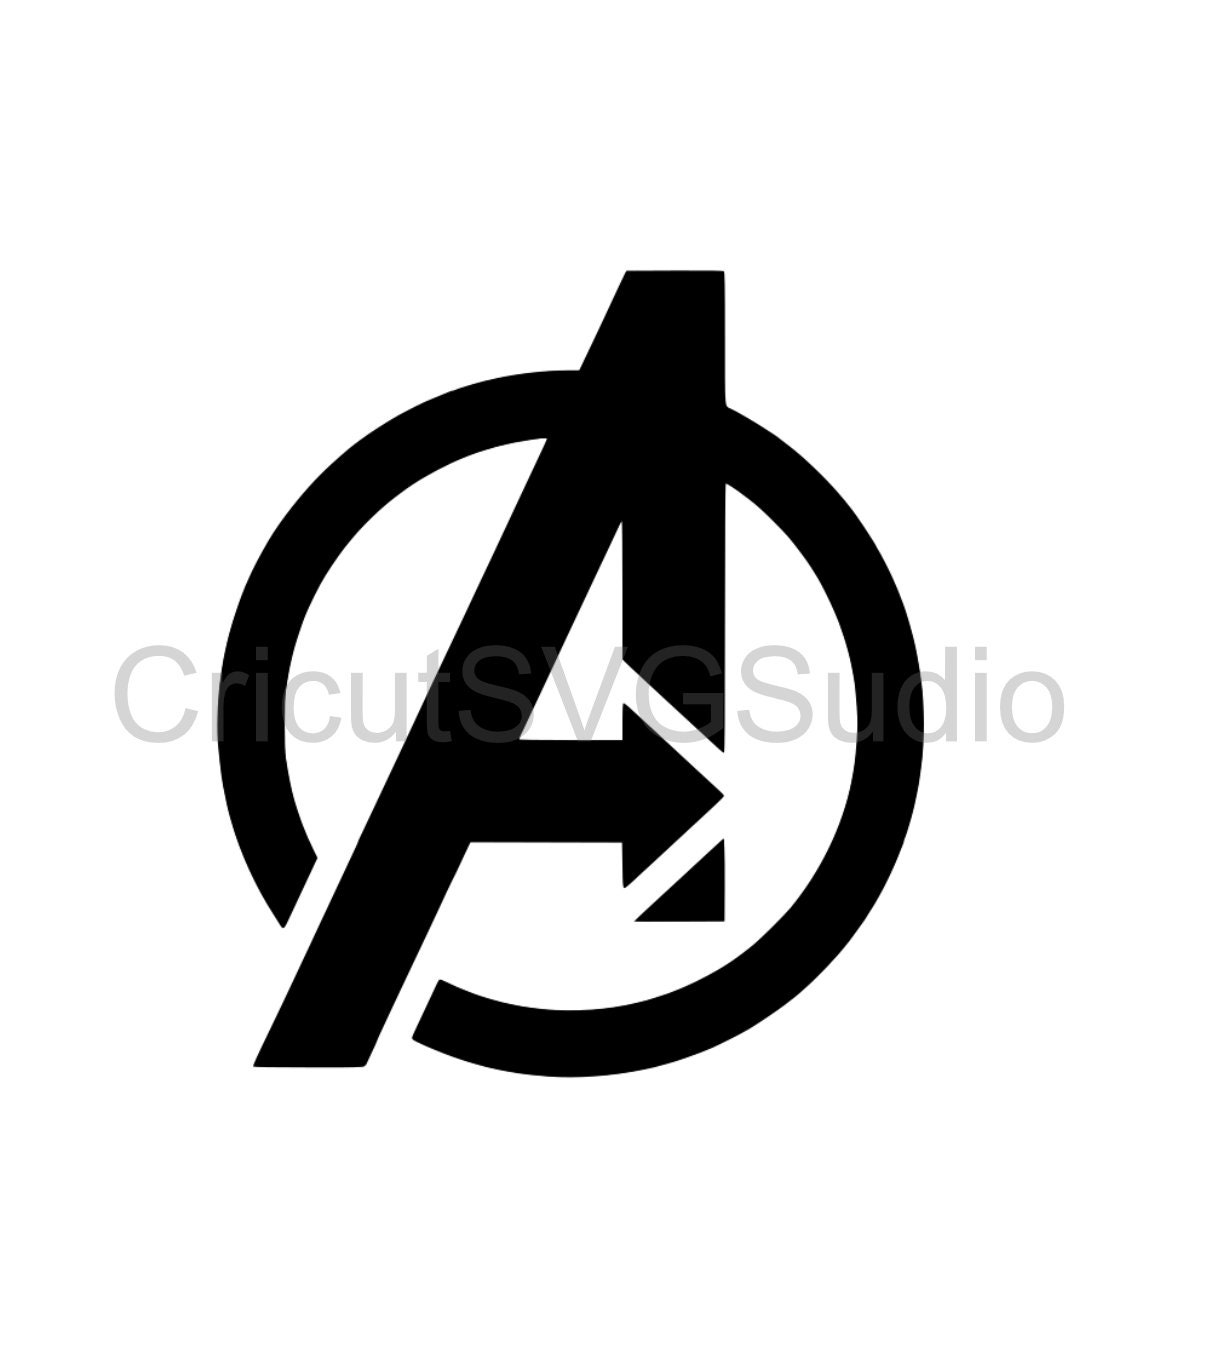 Avengers Logos Vinyl Stickers Water Bottles Decals Super Heroes Symbols  Decal Laptop Phone Car Motorcycle Helmet Marvel Decor